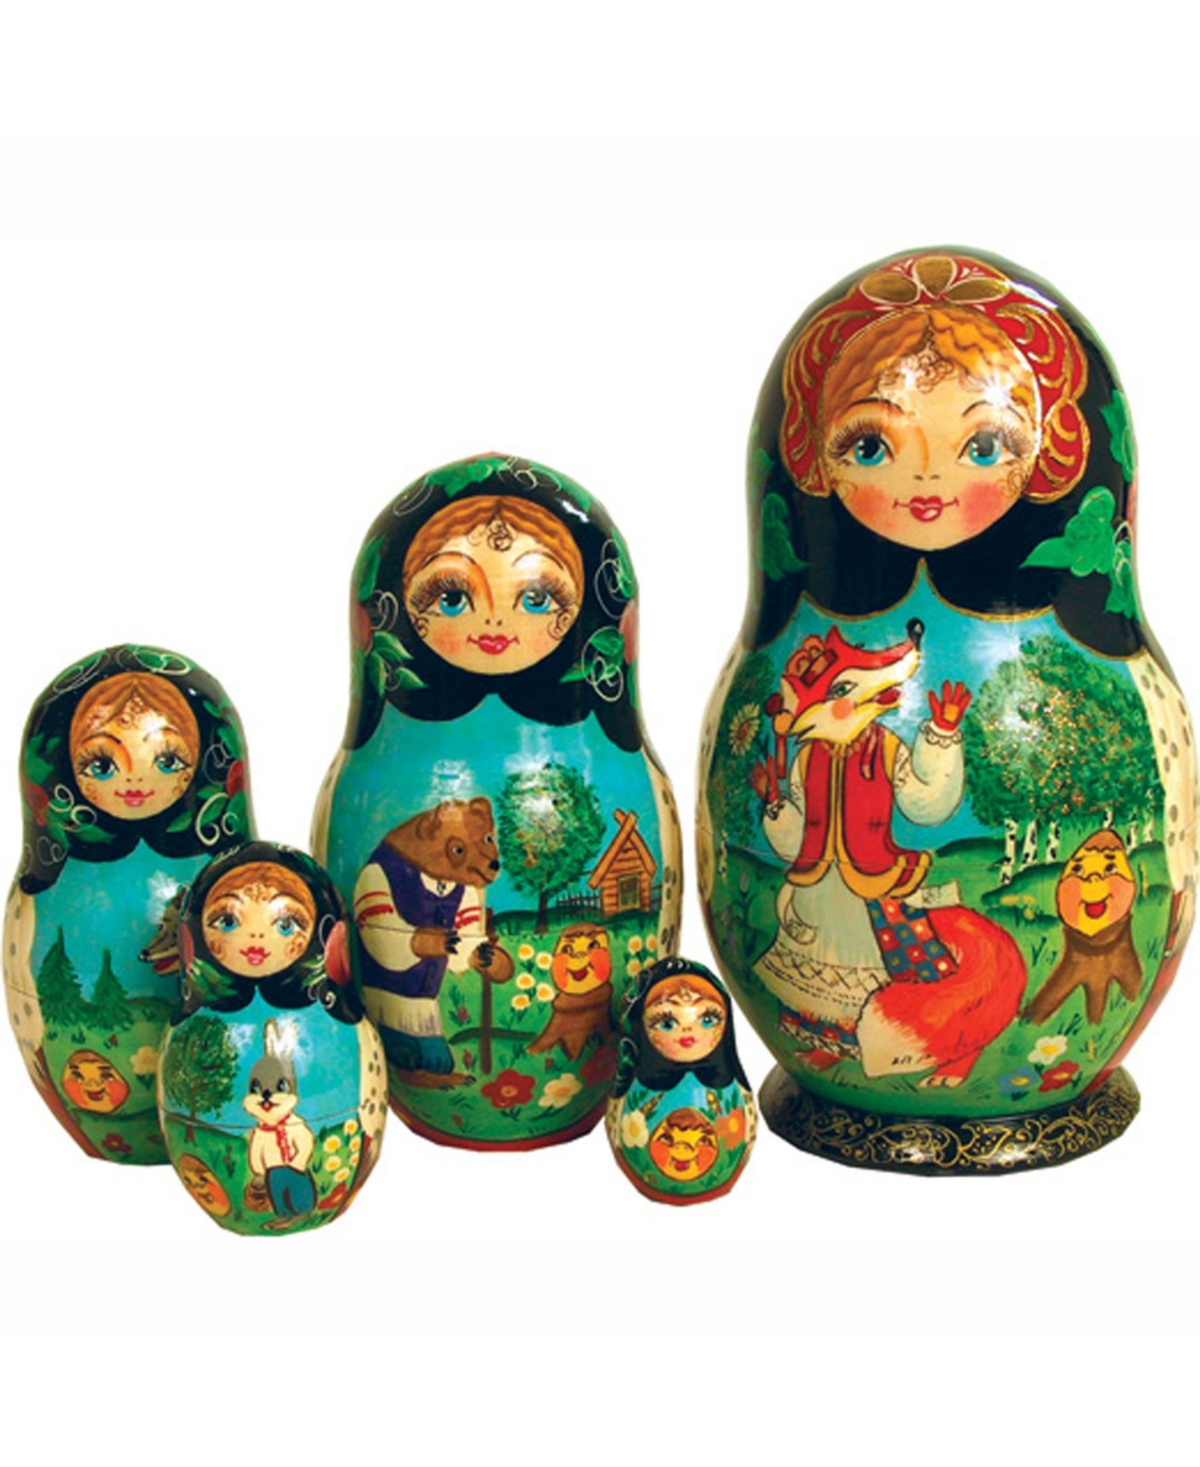 5 Piece Ginger Bread Russian Matryoshka Nested Doll Set - Multi